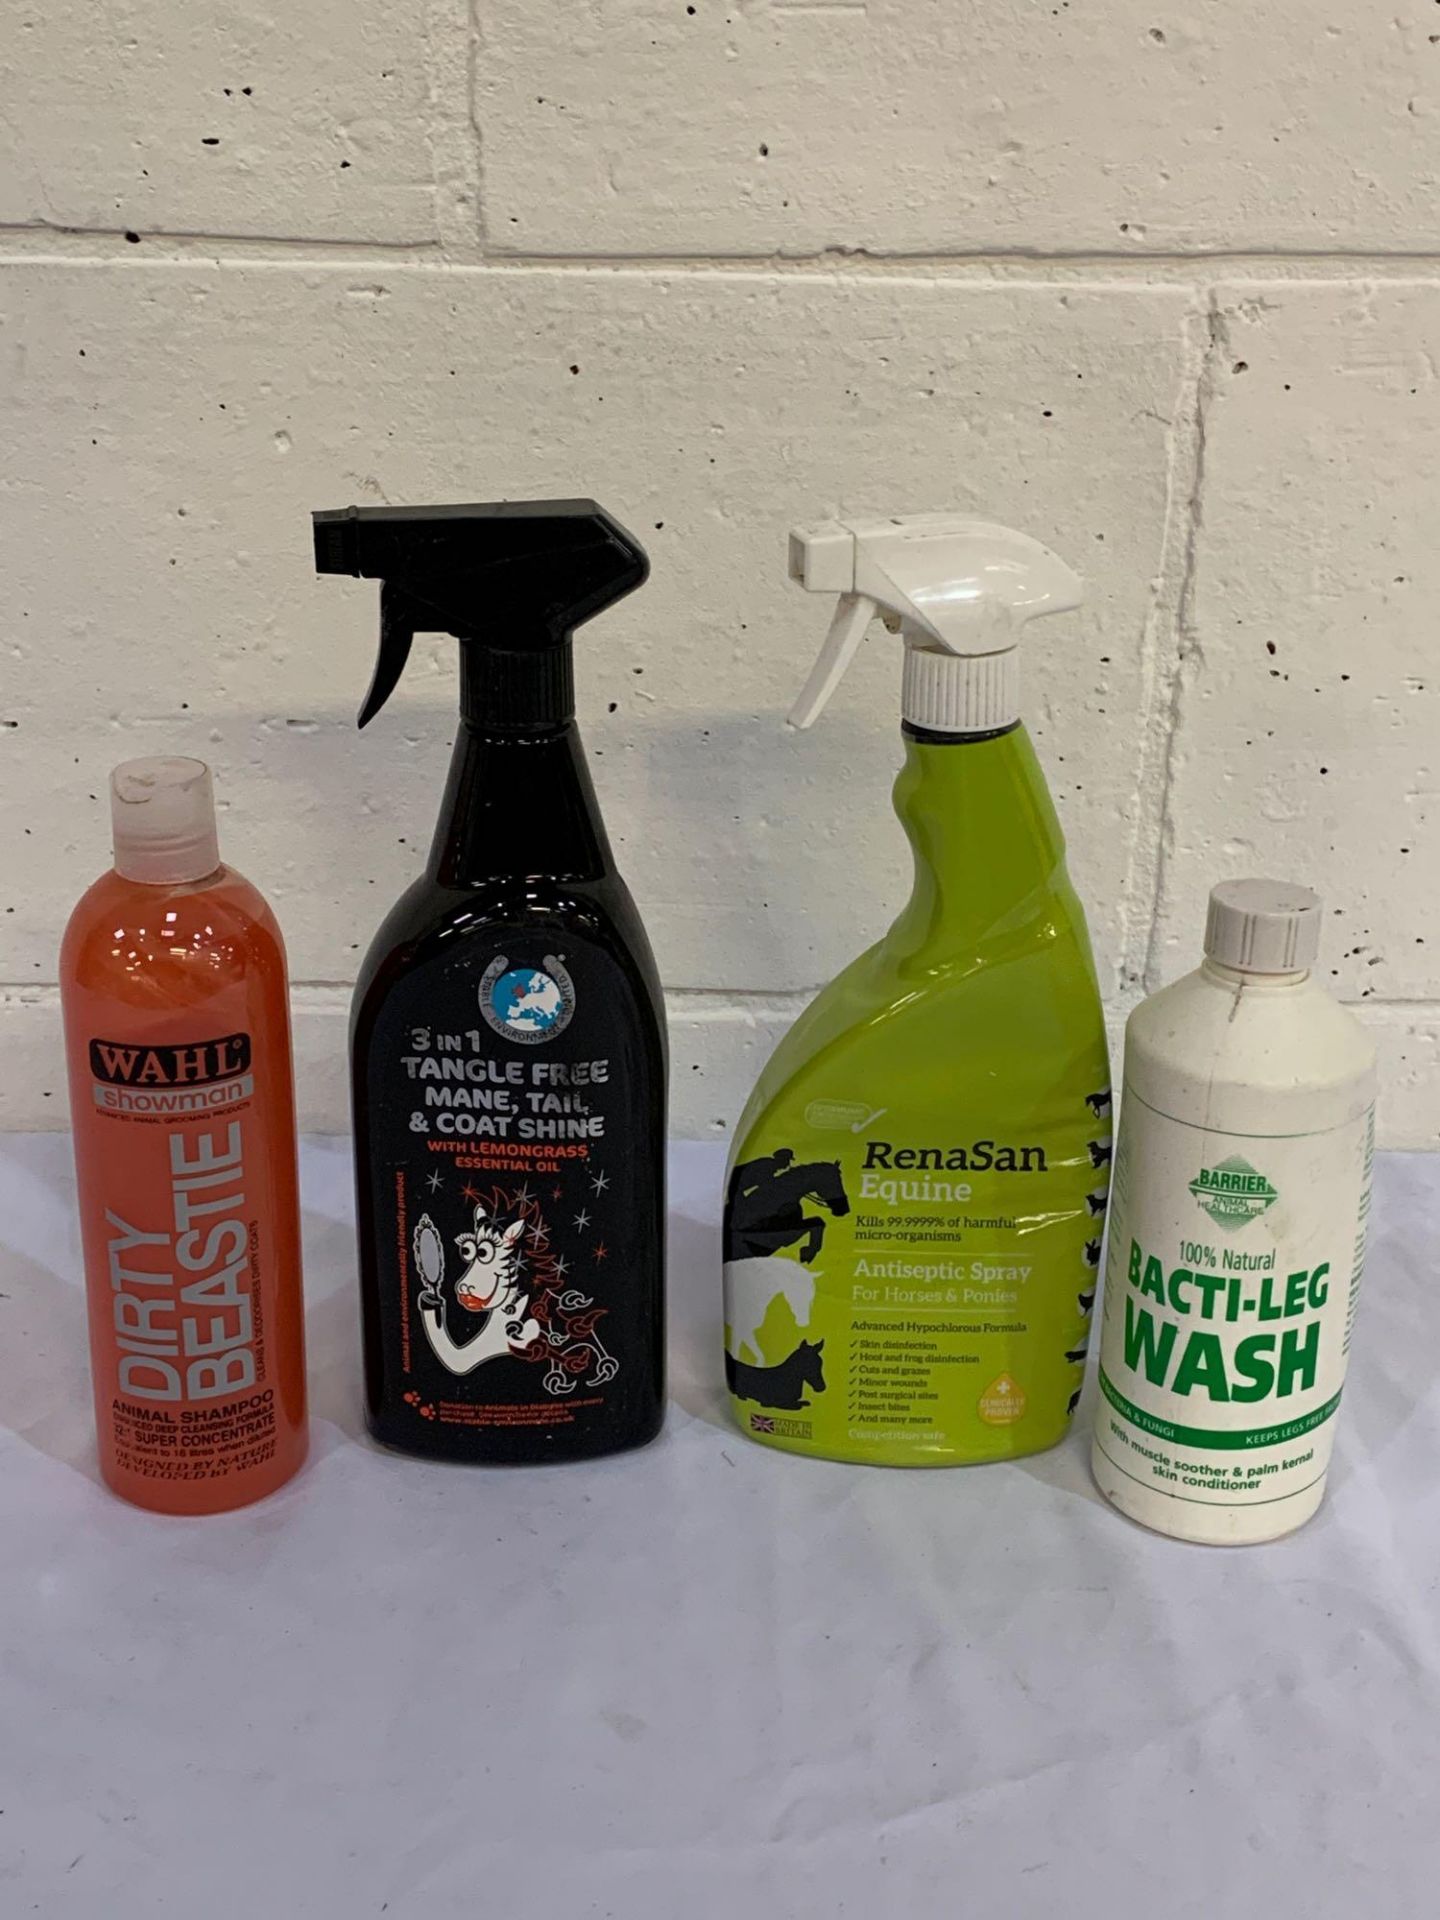 Barrier Balti-leg wash, Wahl showman shampoo, Renasan antiseptic spray and tangle free spray.